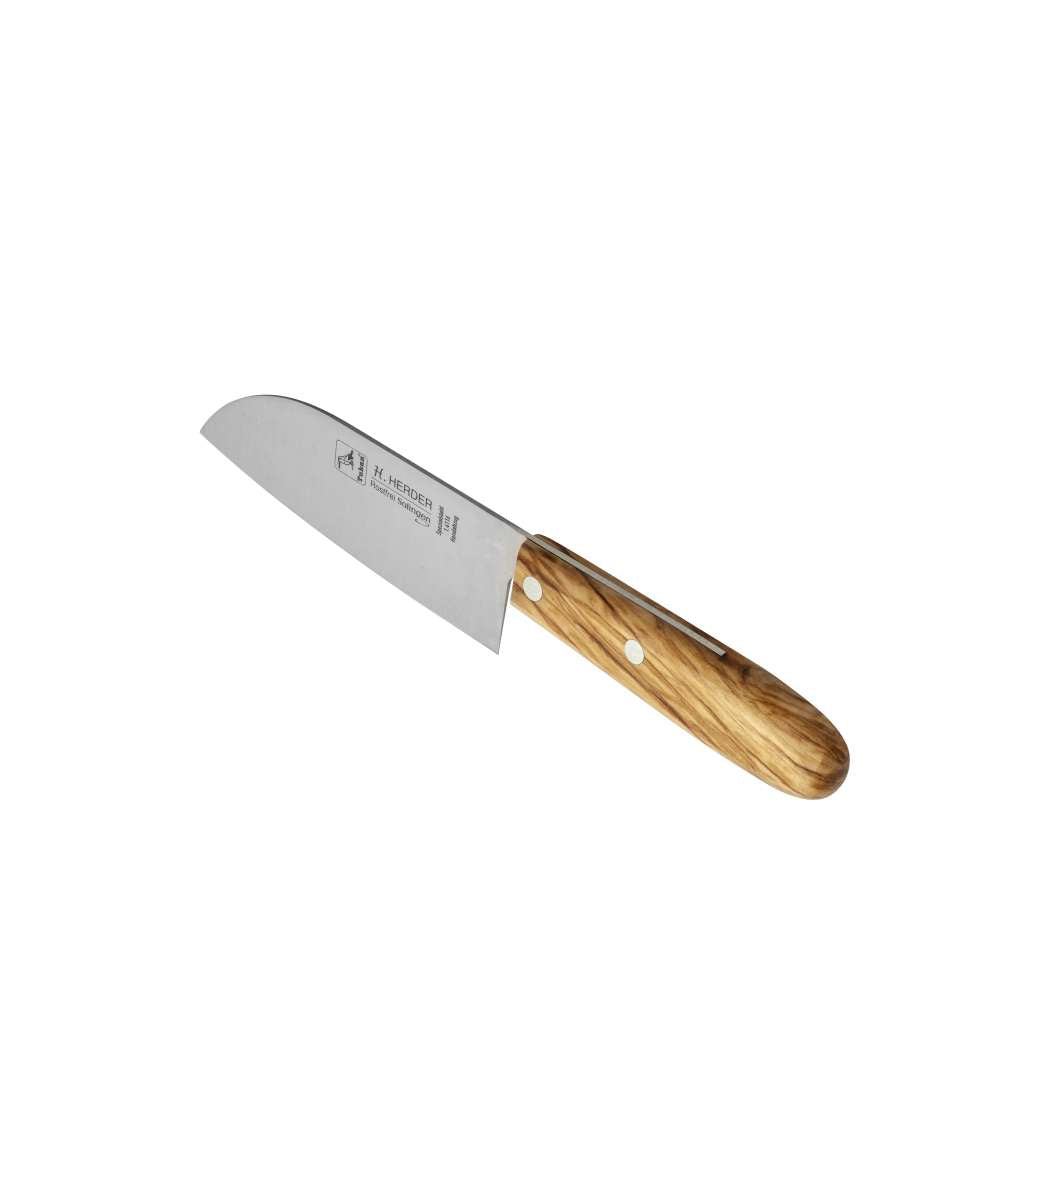 Mini santoku knife, 13.5 cm with olive wood handle